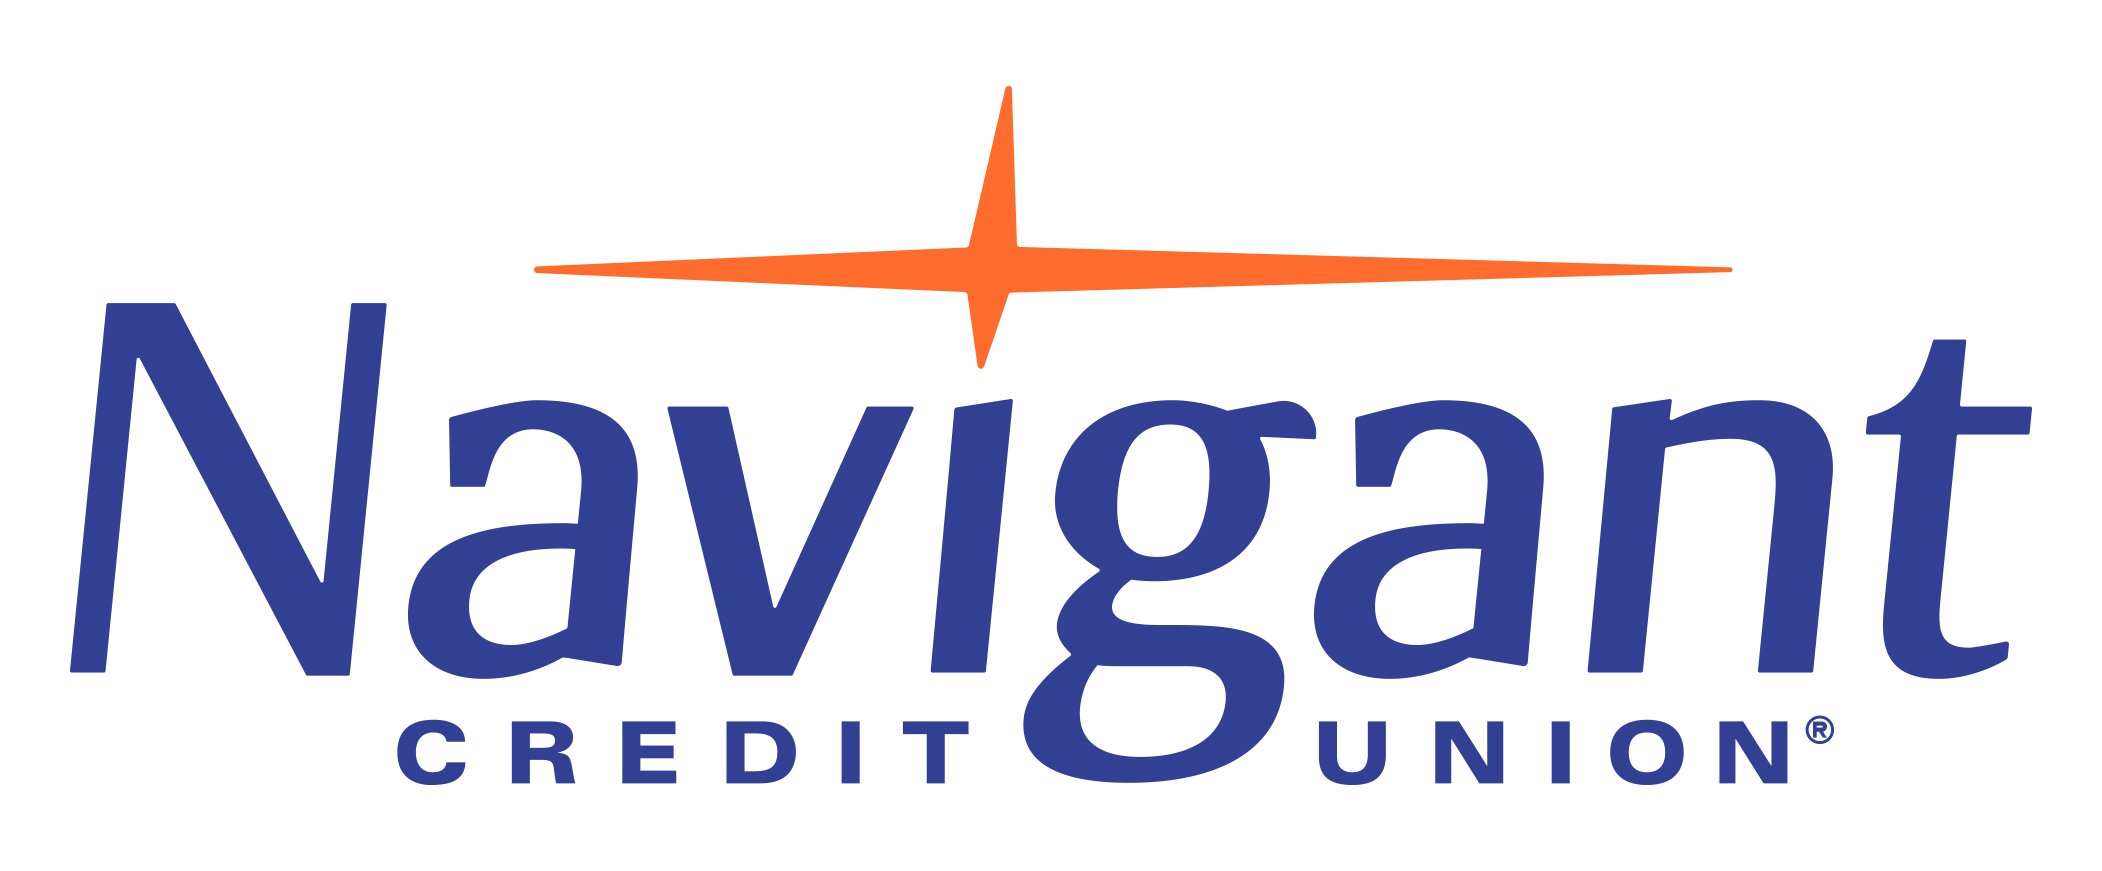 Navigant CU Logo.png